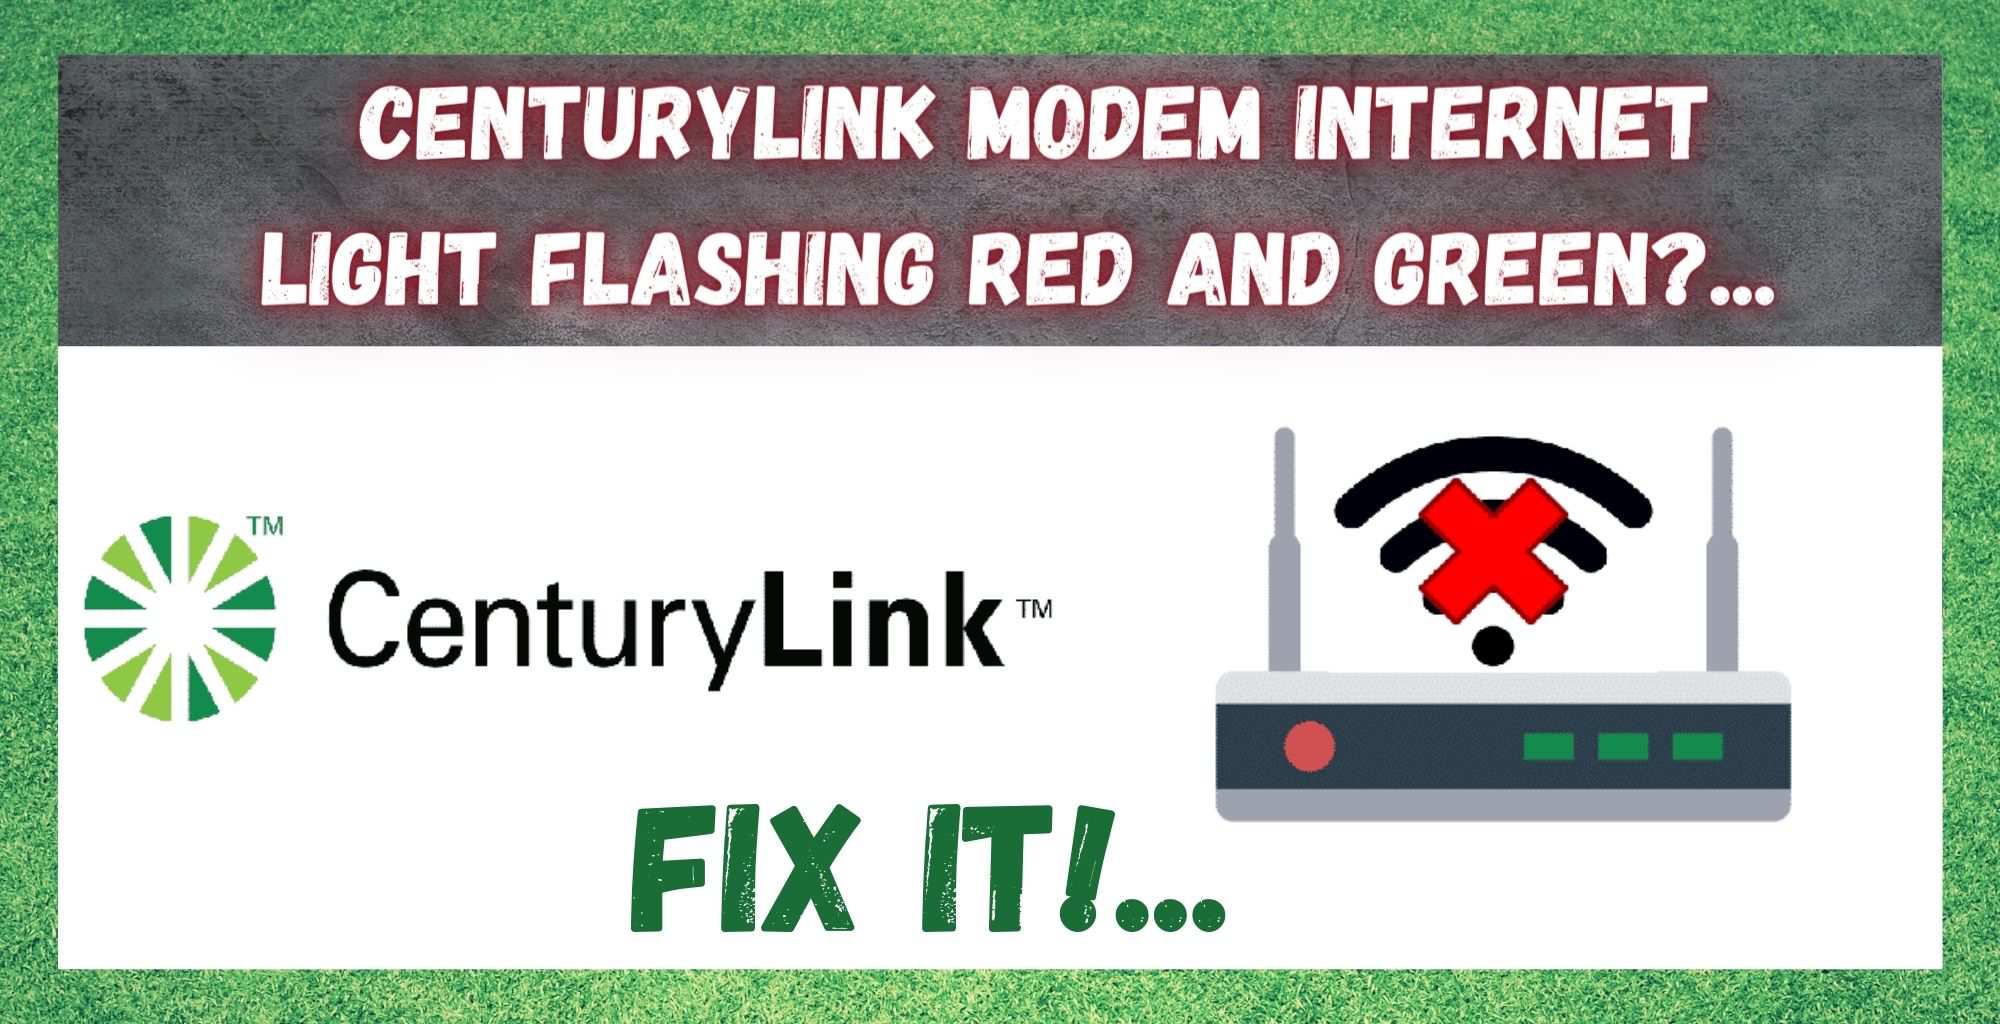 CenturyLink Modem Internet Light Flashing Red And Green